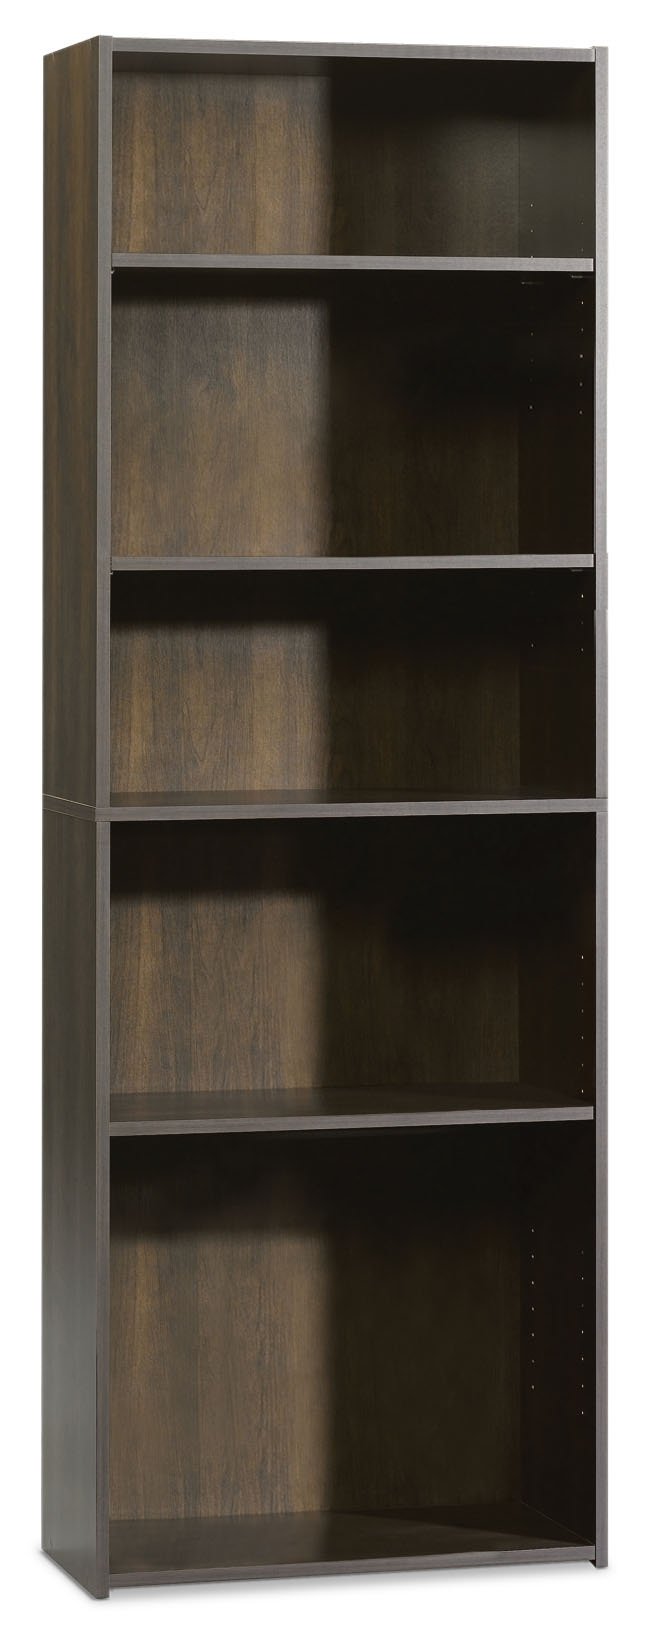 Currow 5-Shelf Bookcase - Cinnamon Cherry